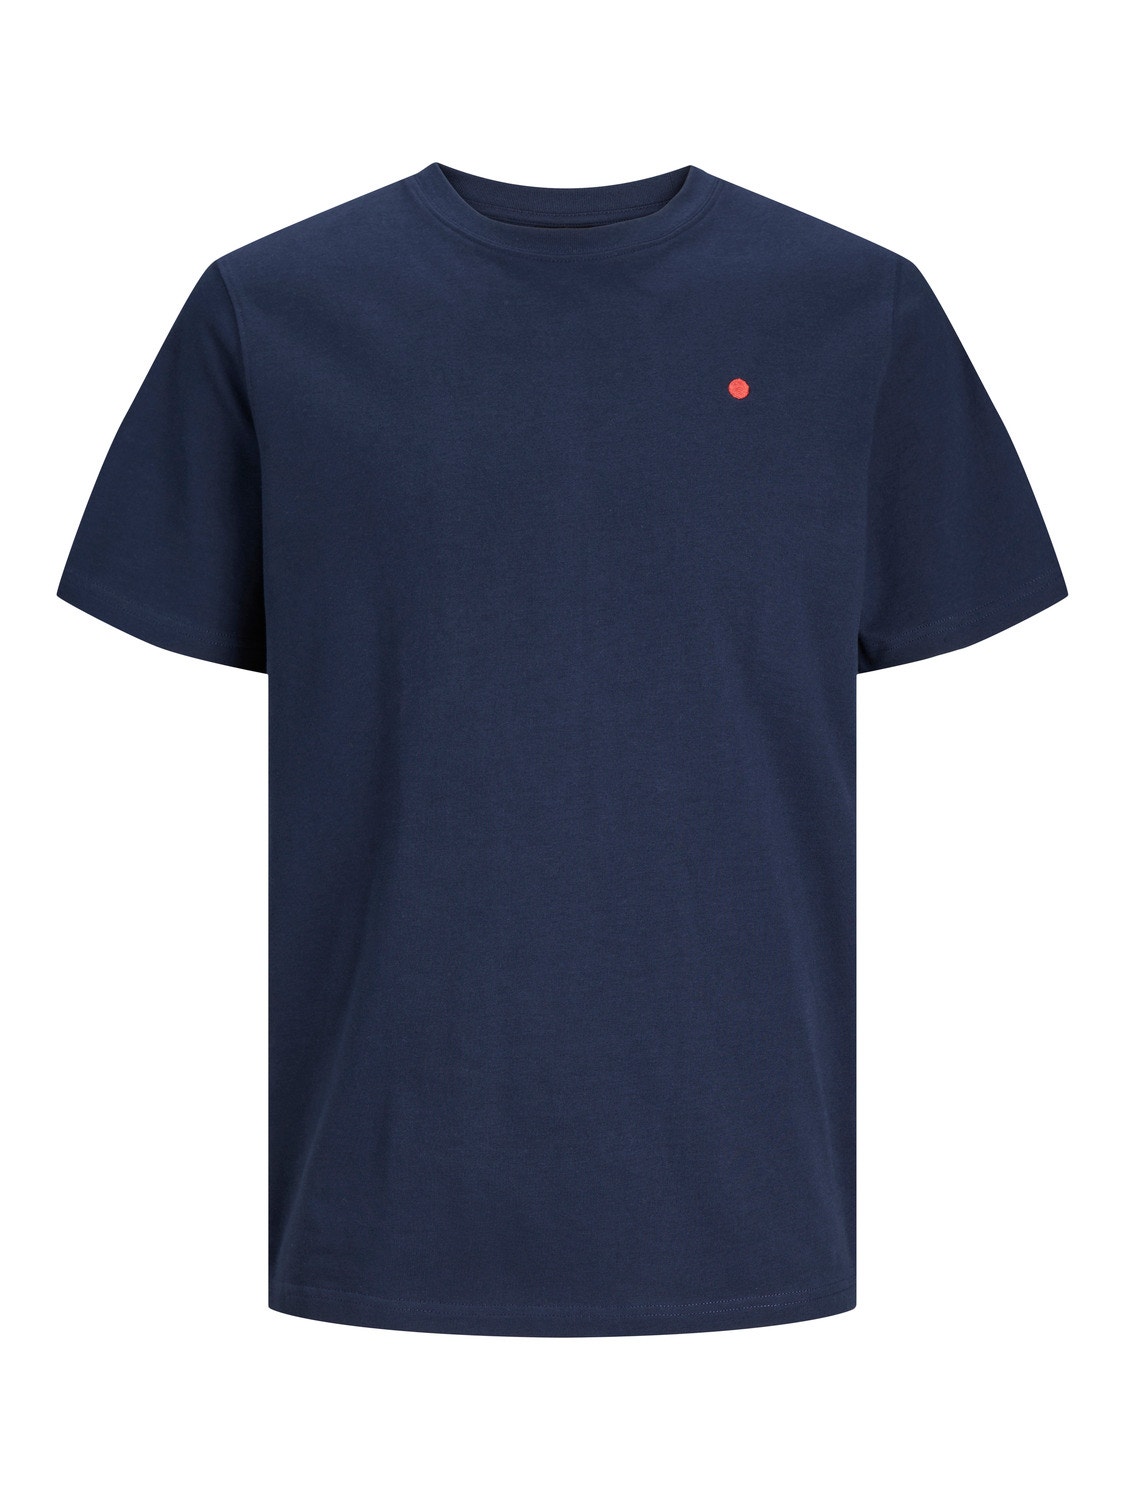 Jack & Jones RDD Plain Crew neck T-shirt -Navy Blazer - 12254551